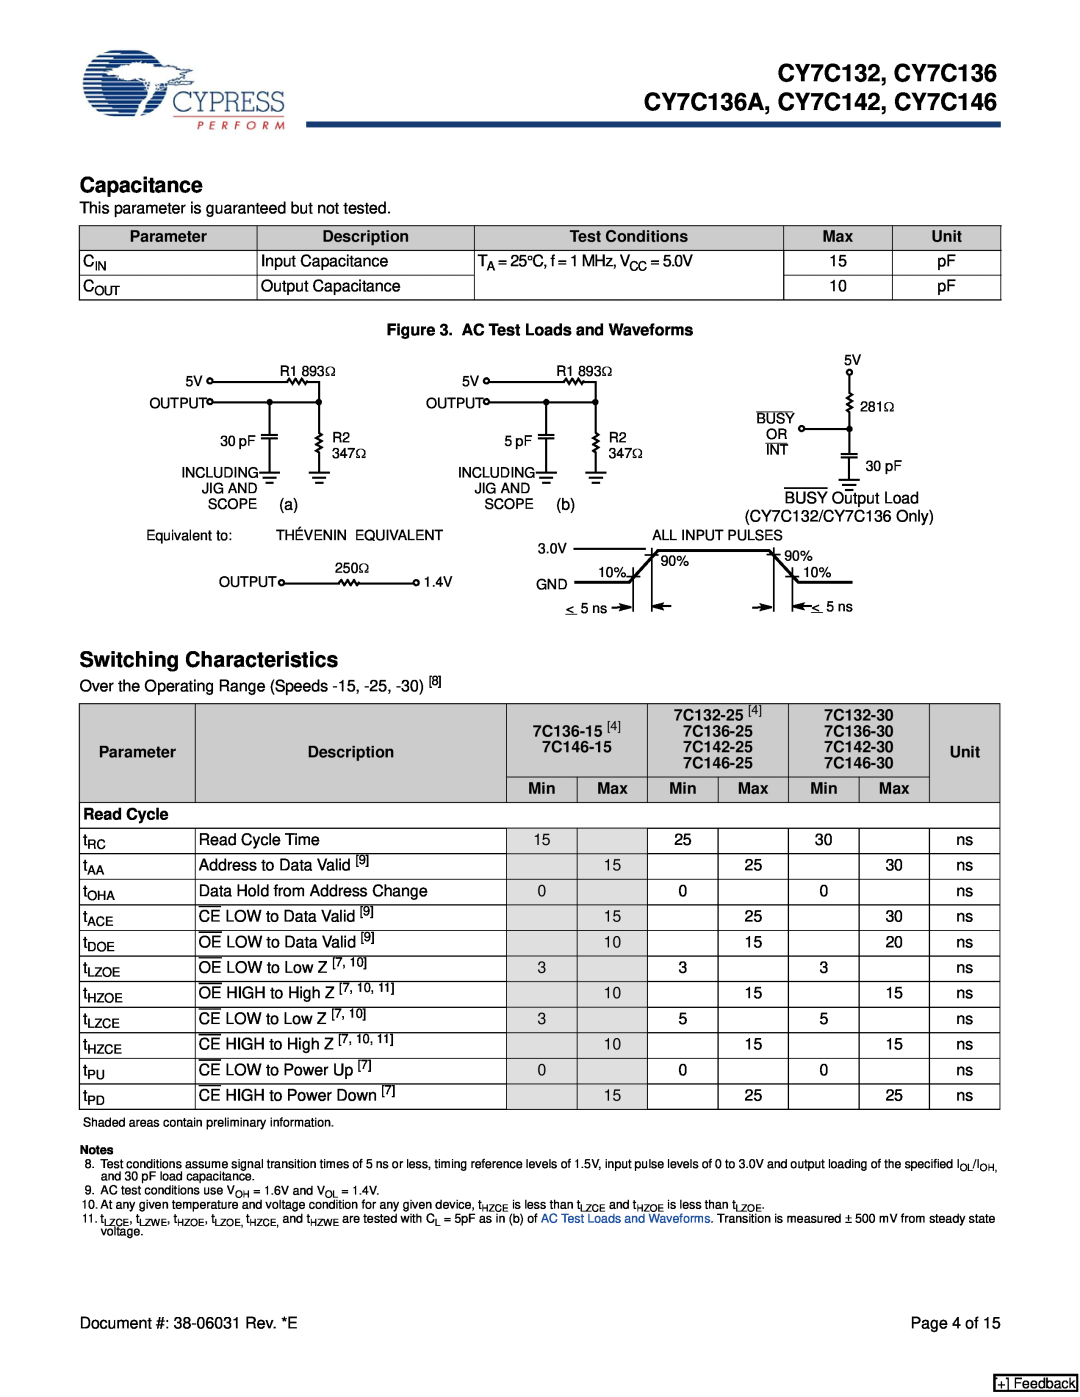 Cypress manual Capacitance, Switching Characteristics, CY7C132, CY7C136 CY7C136A, CY7C142, CY7C146 